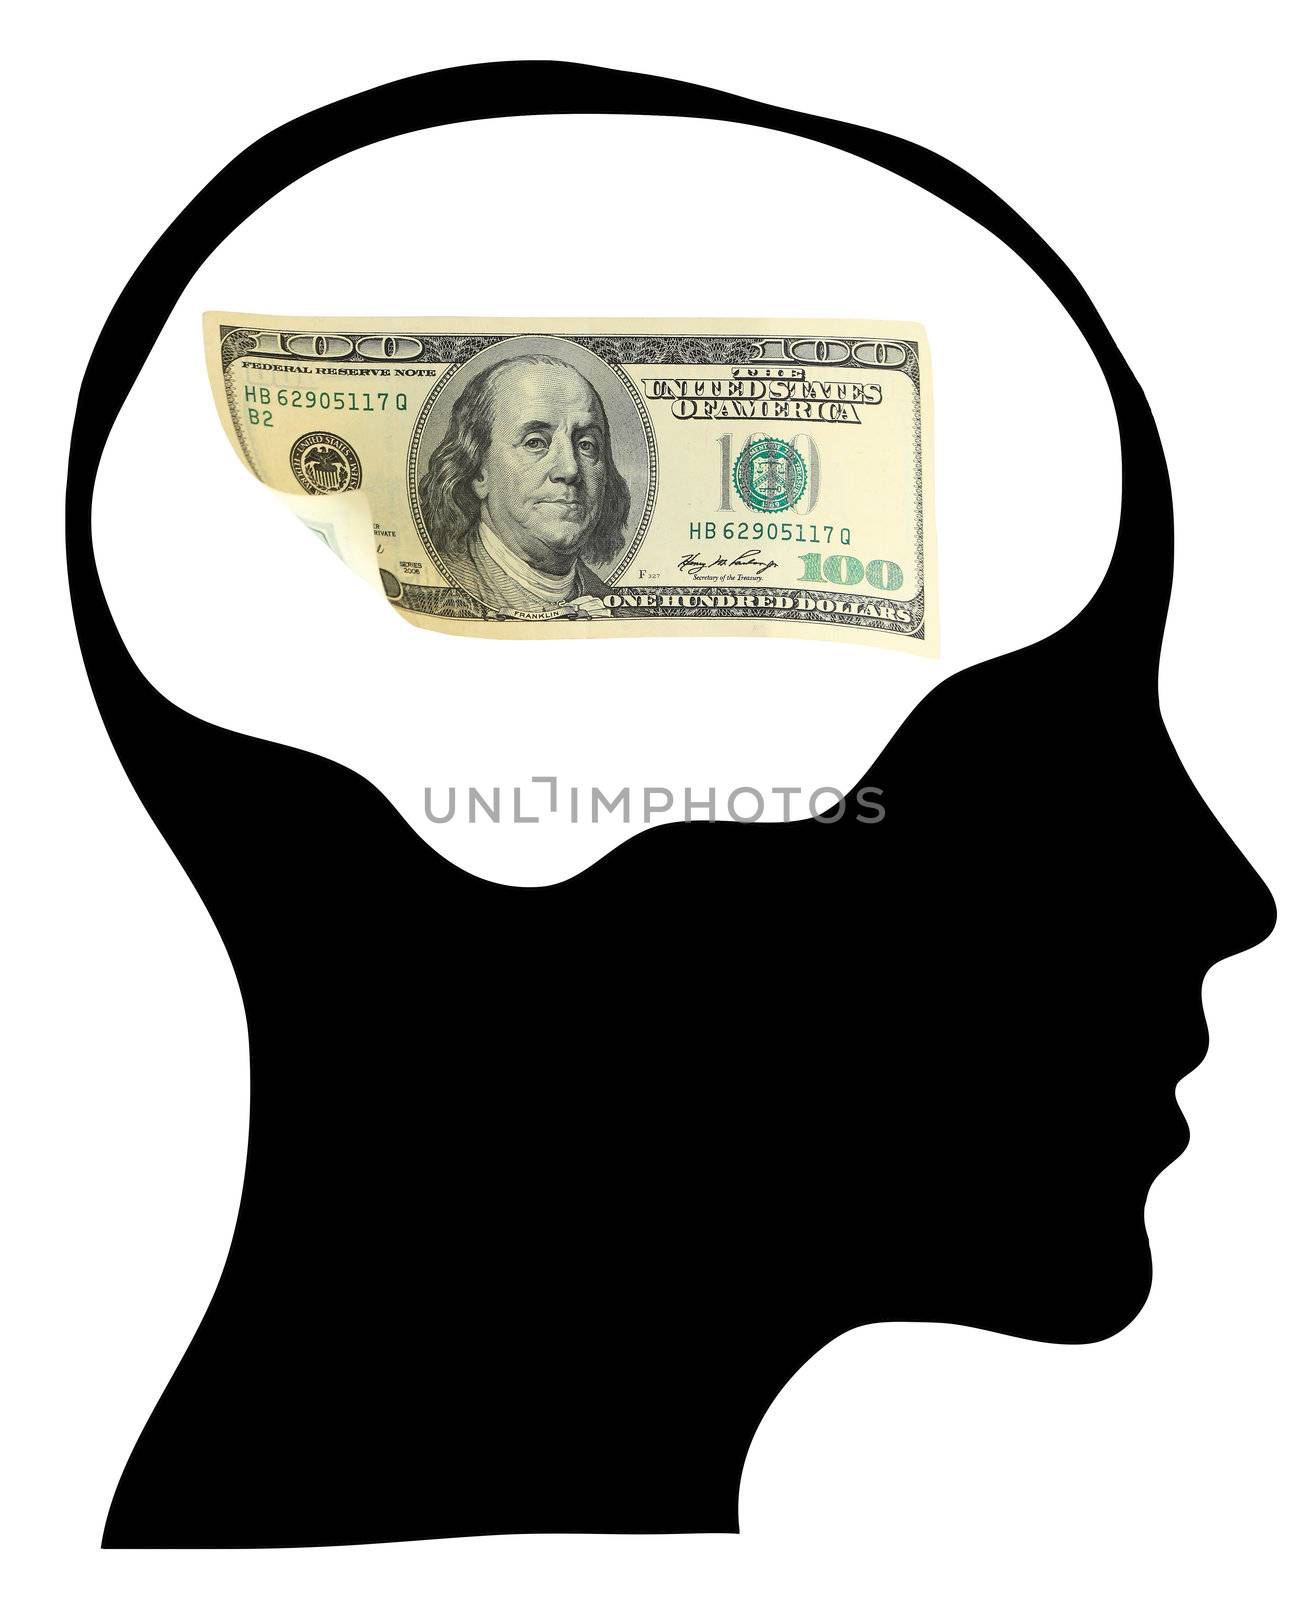 Dollars to control the human brain,